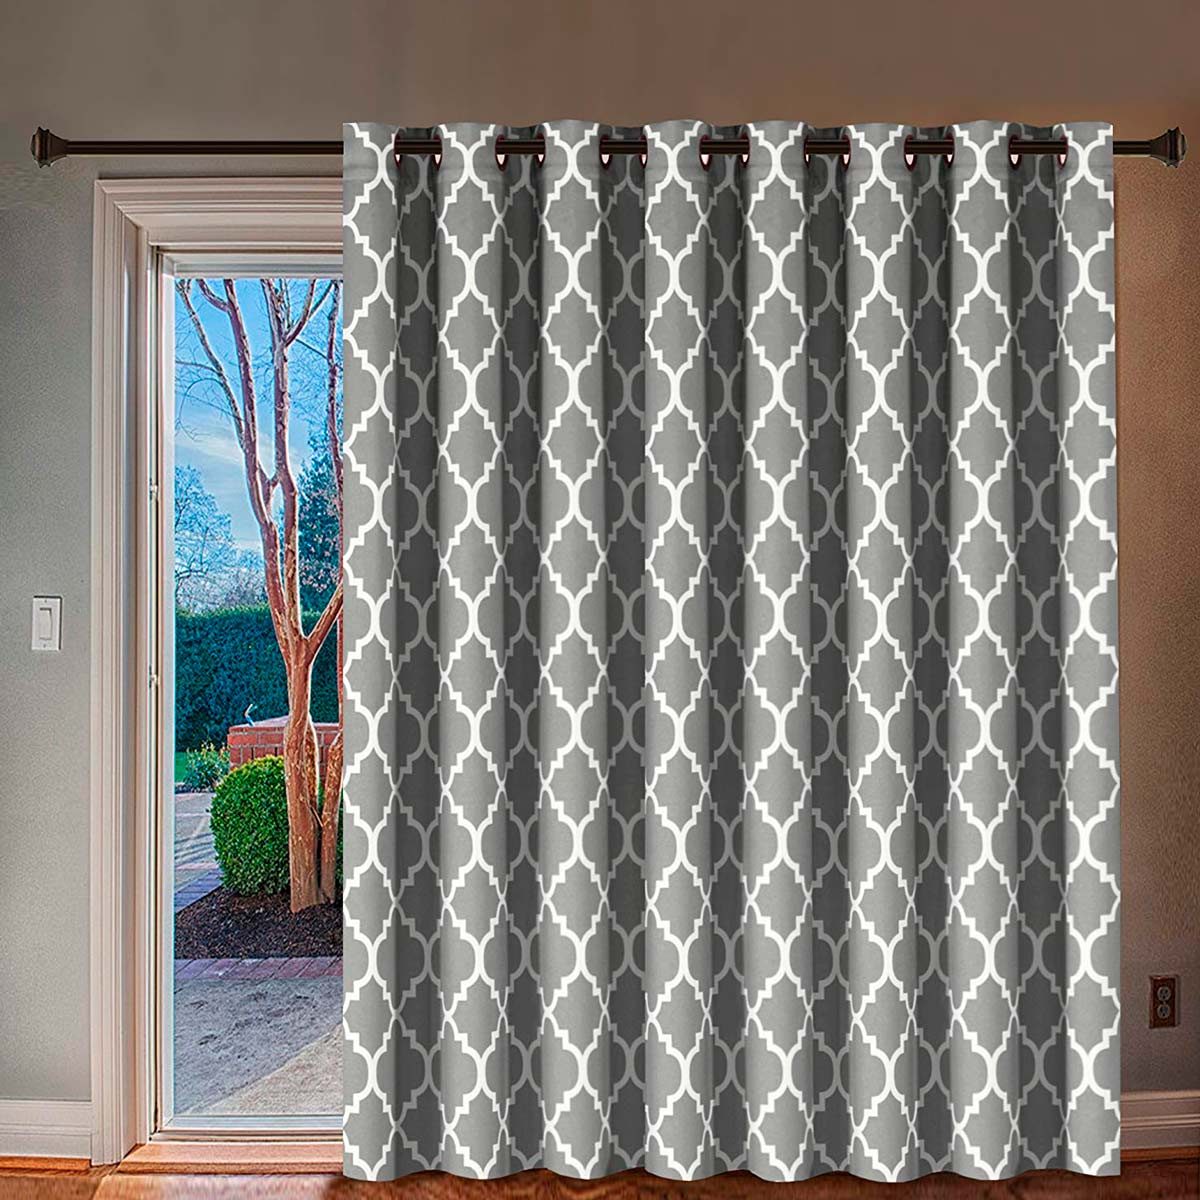 Simple Patio Door Curtain Ideas for Simple Design